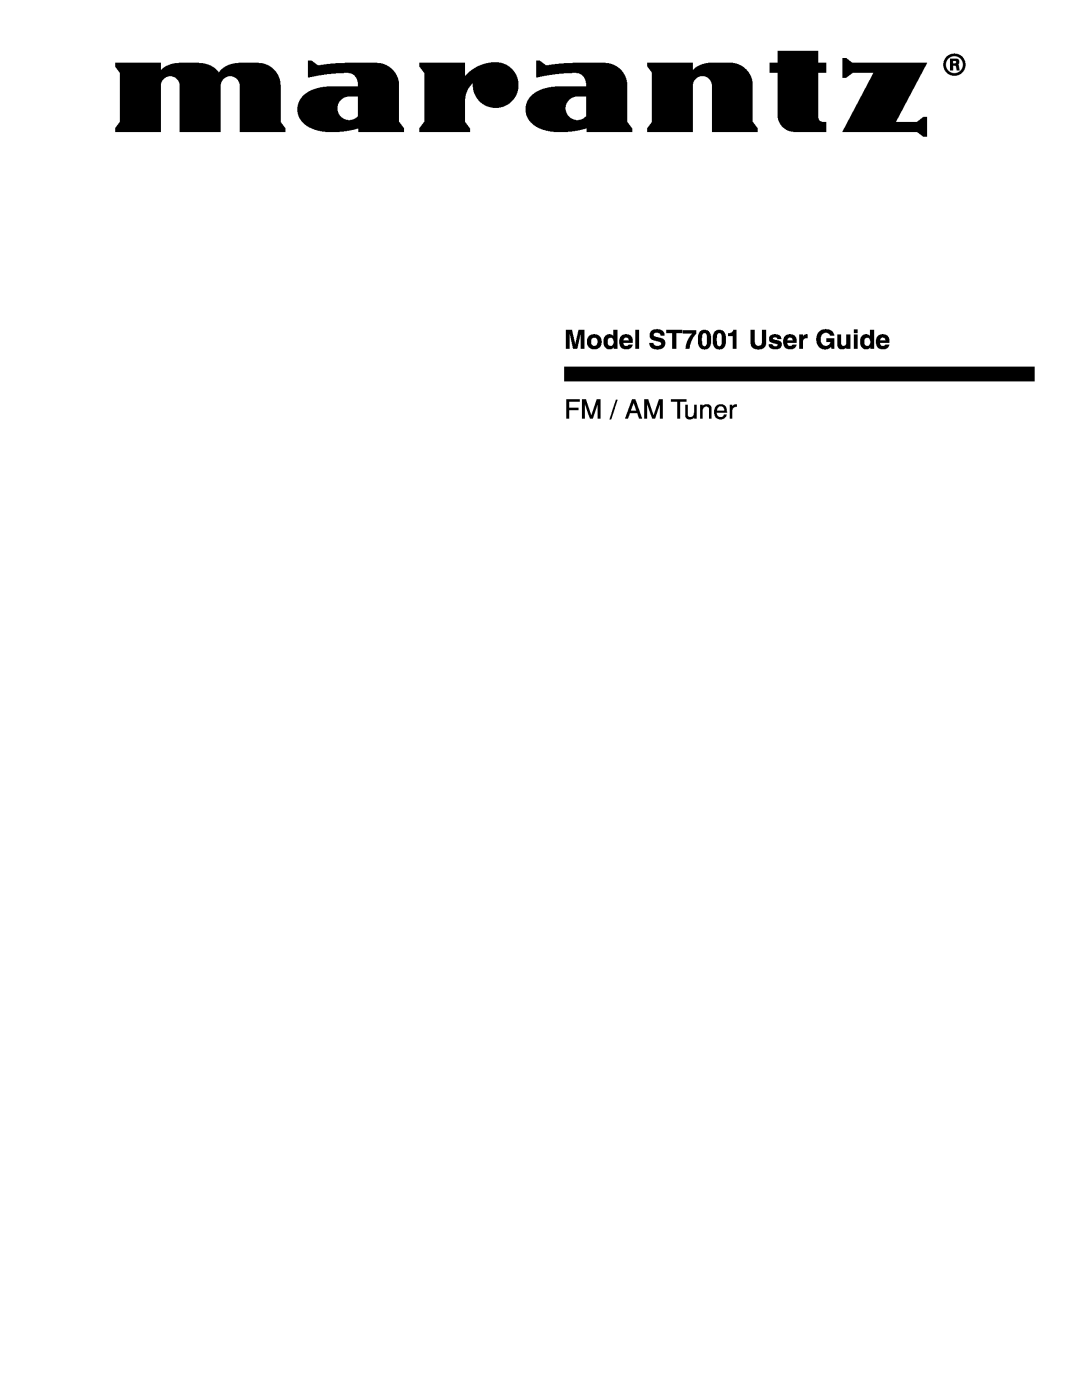 Marantz manual Model ST7001 User Guide, FM / AM Tuner 